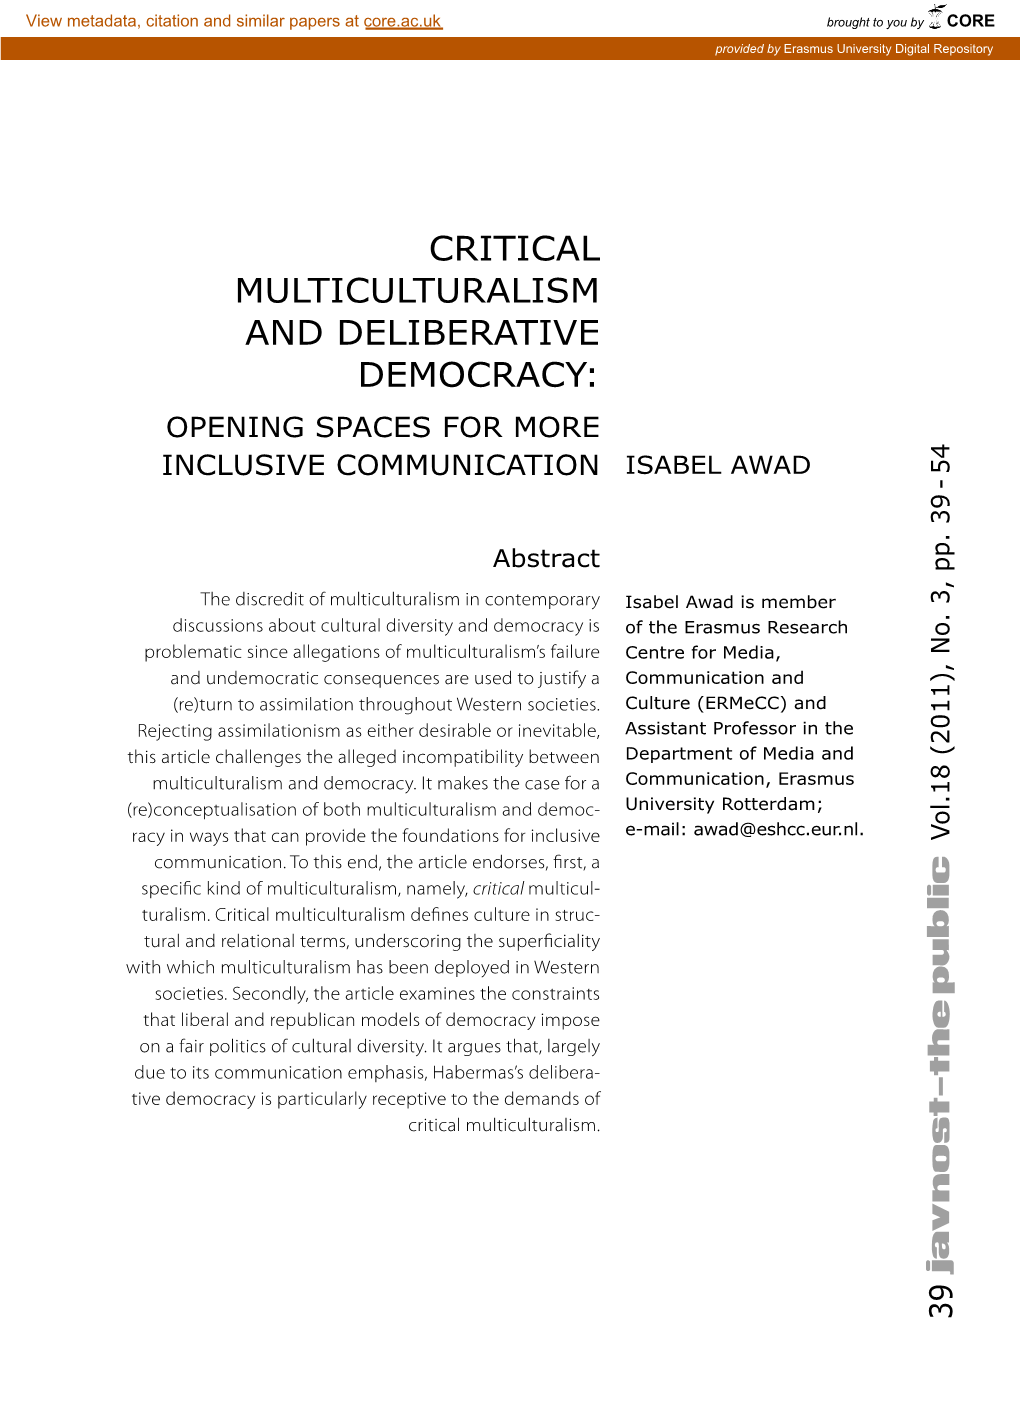 Critical Multiculturalism and Deliberative Democracy